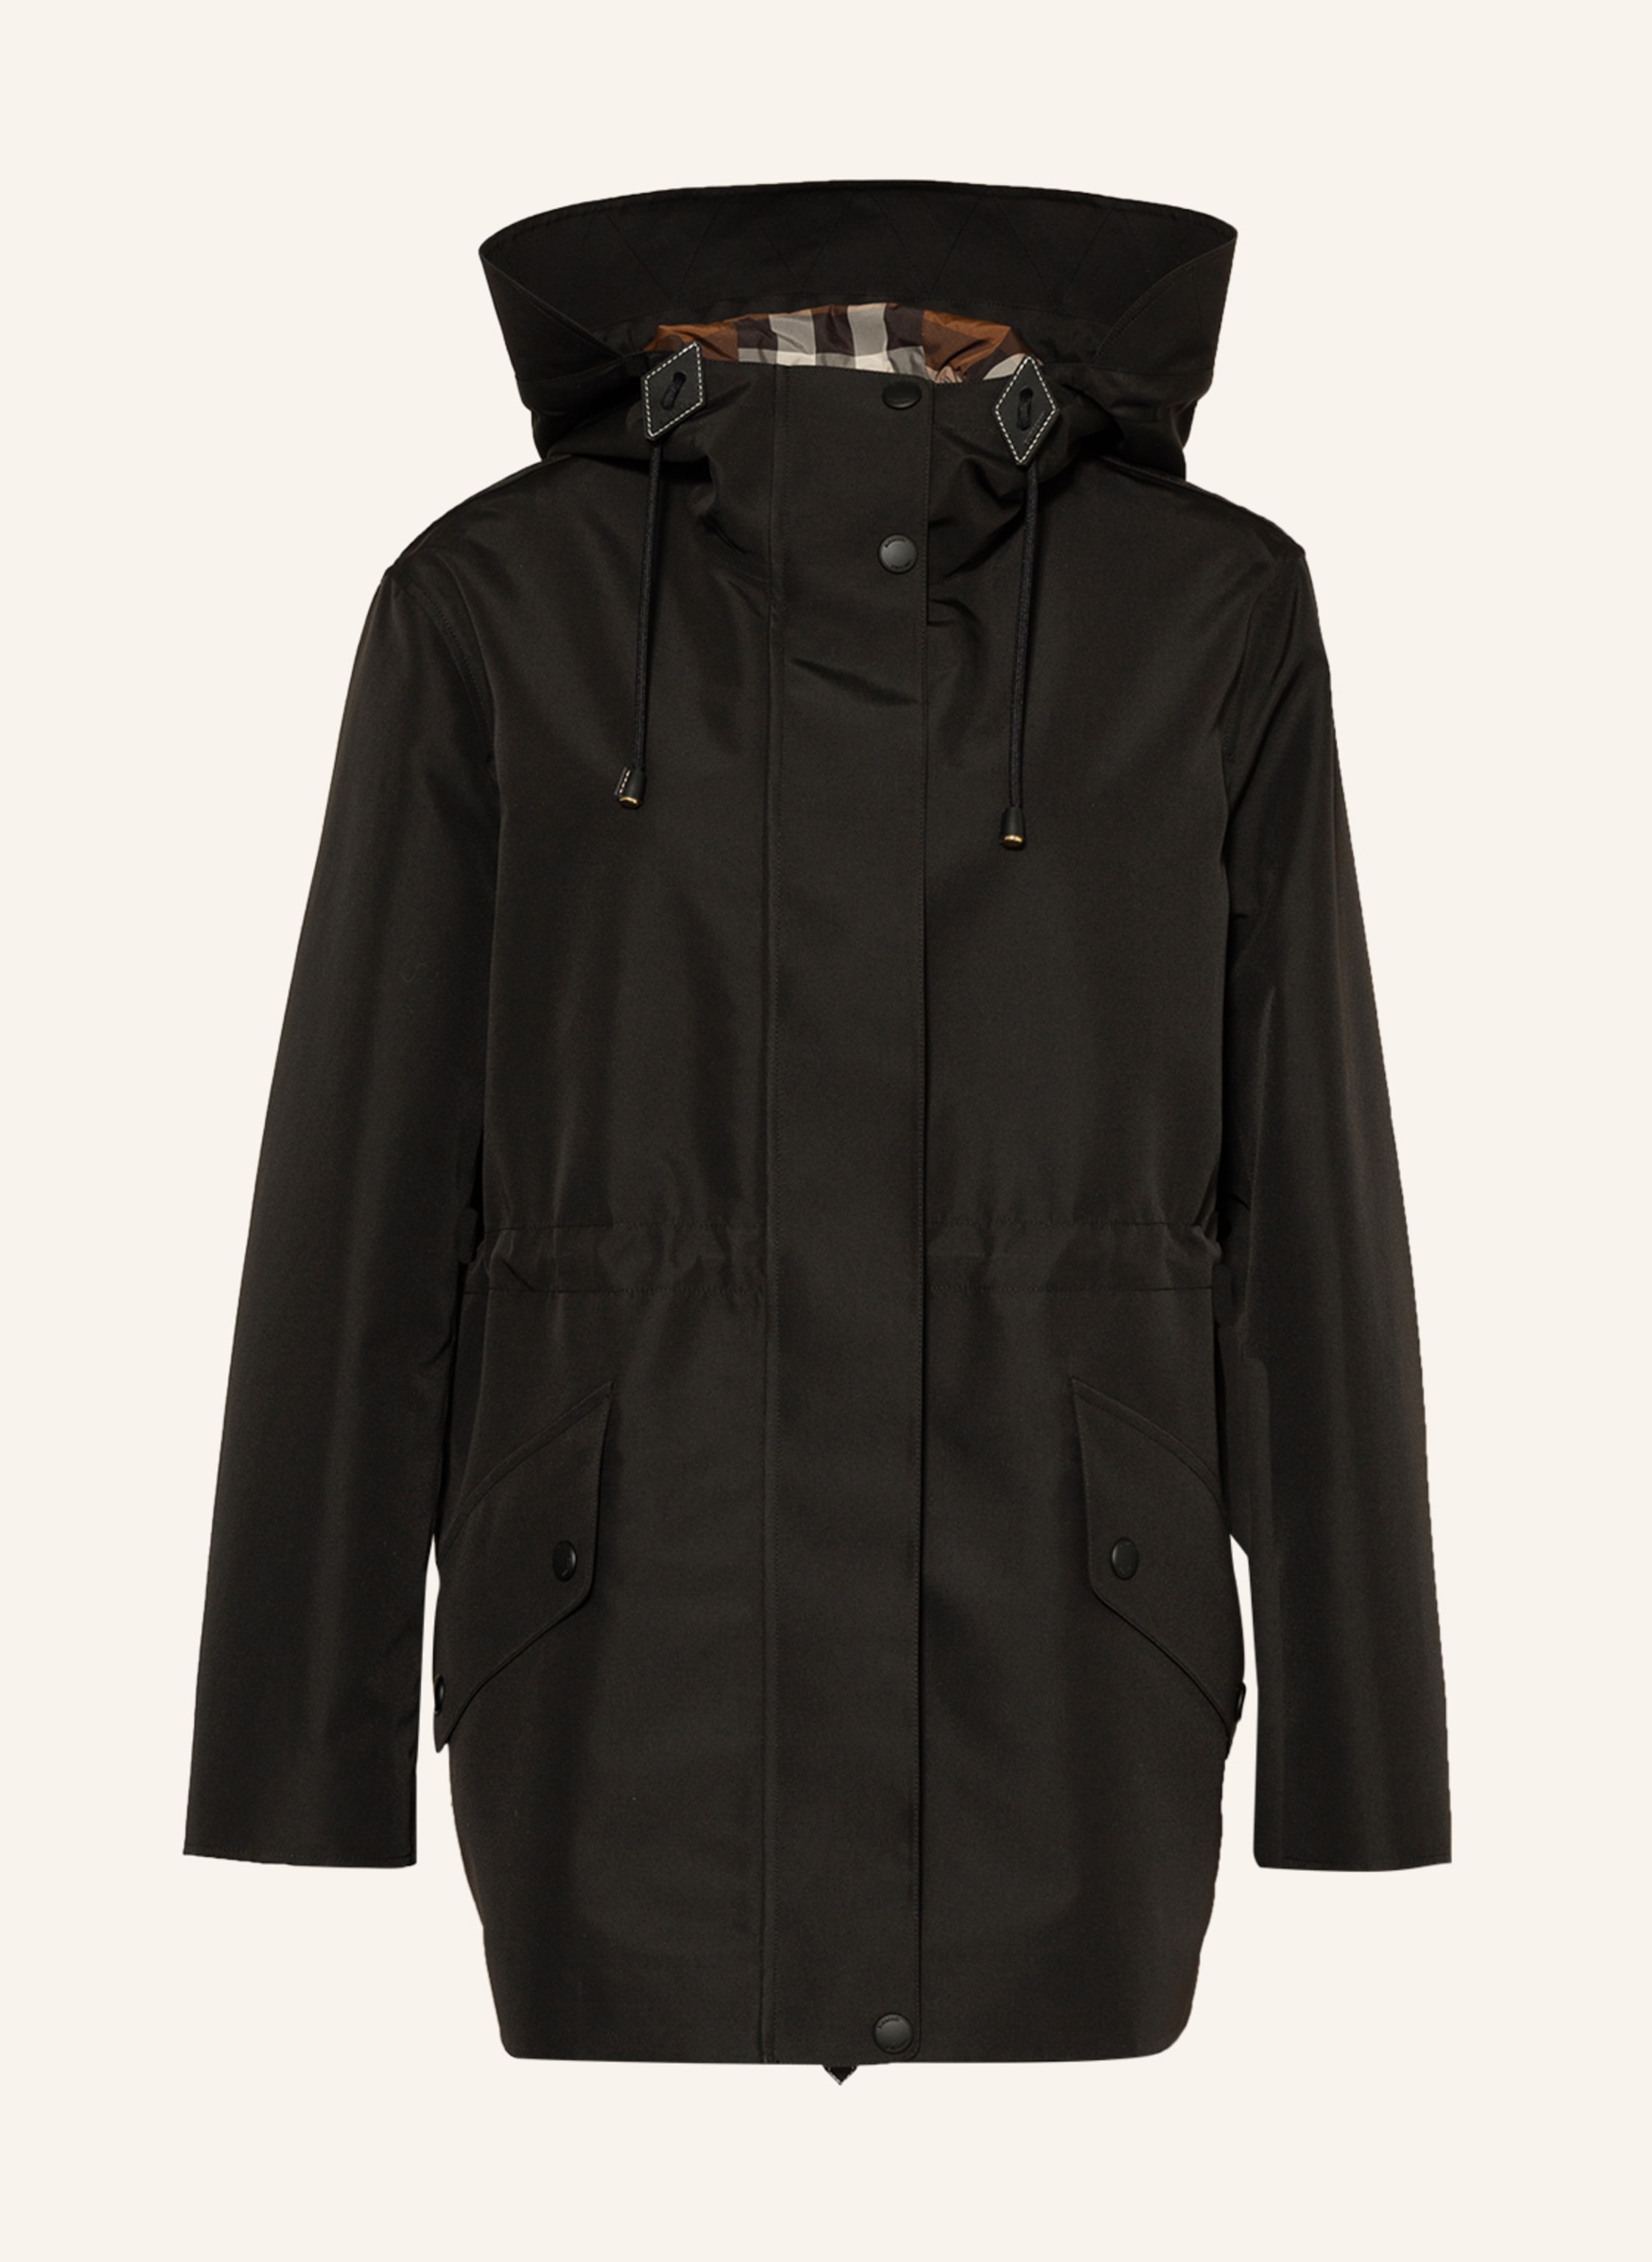 BURBERRY Rain jacket BINHAM in black | Breuninger